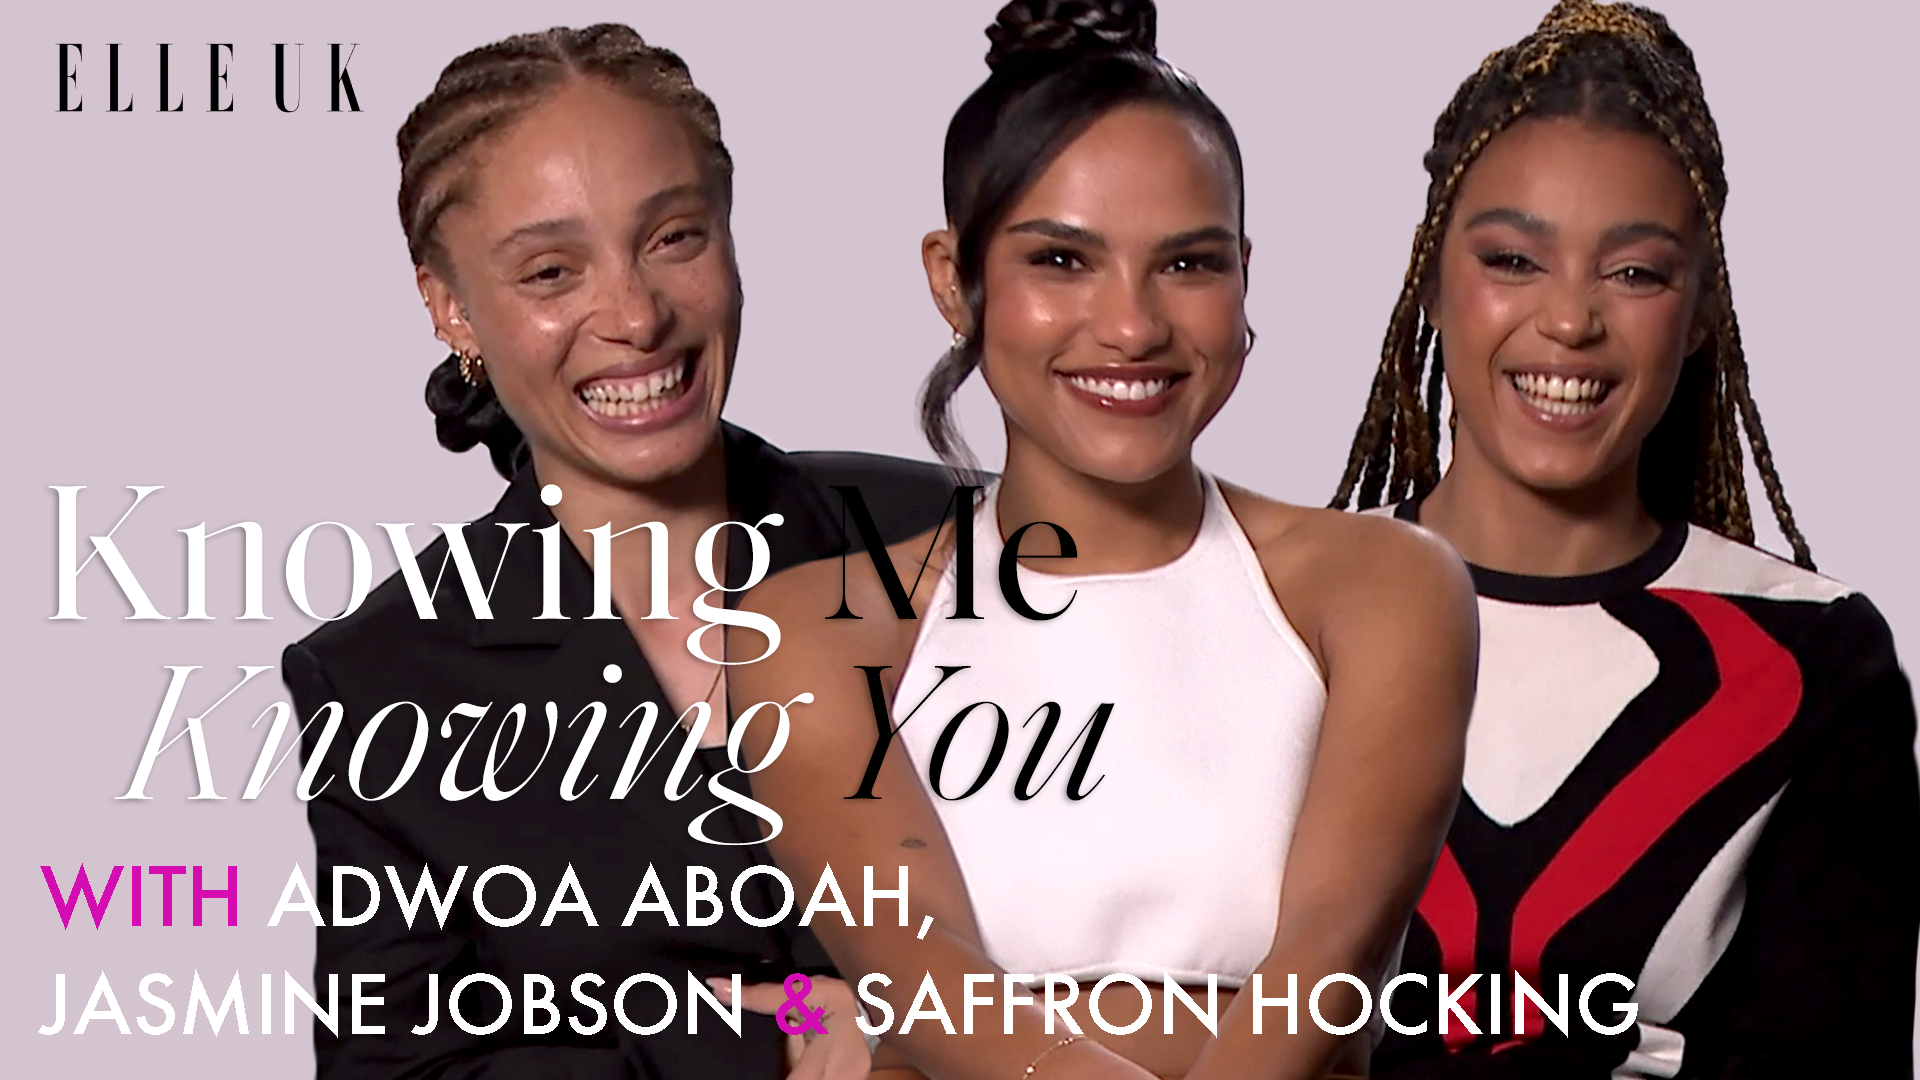 Top Boy's Saffron Hocking, Jasmine Jobson And Adwoa Aboah